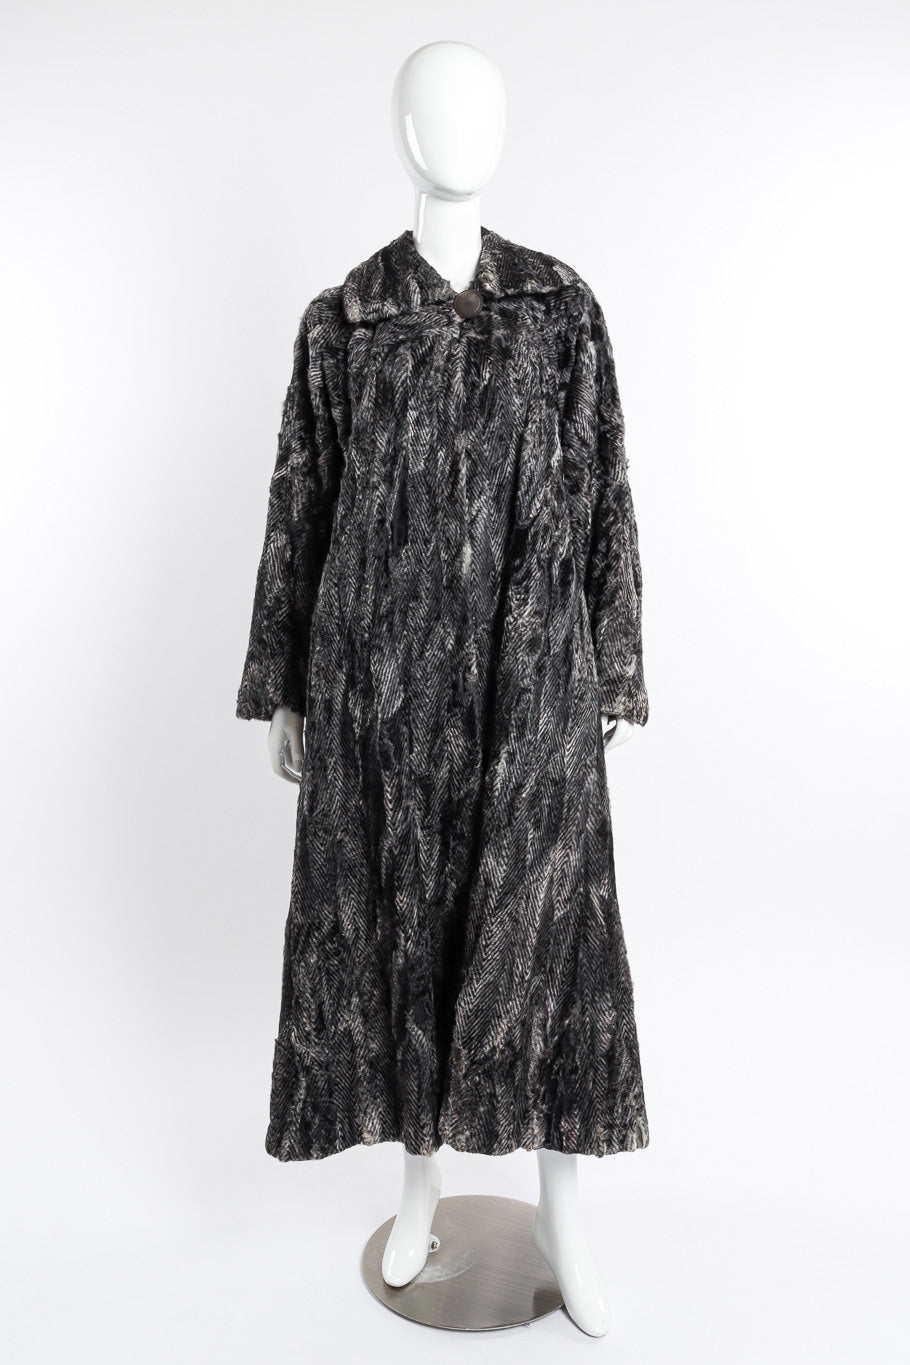 Vintage Fendi Lamb Fur Coat front on mannequin @recessla